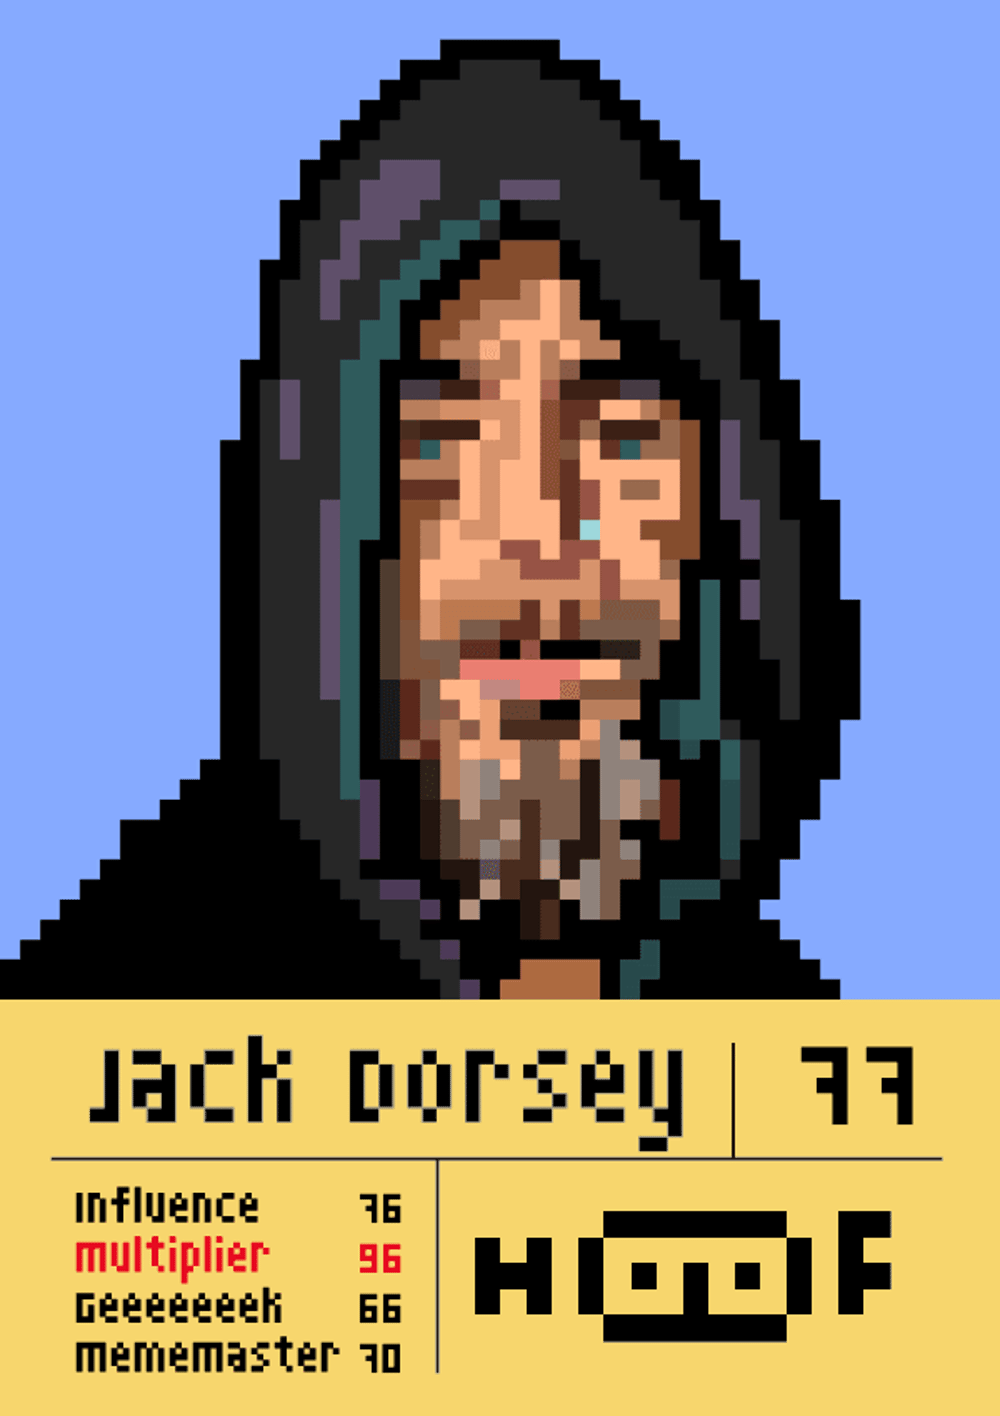 Jack Dorsey #155